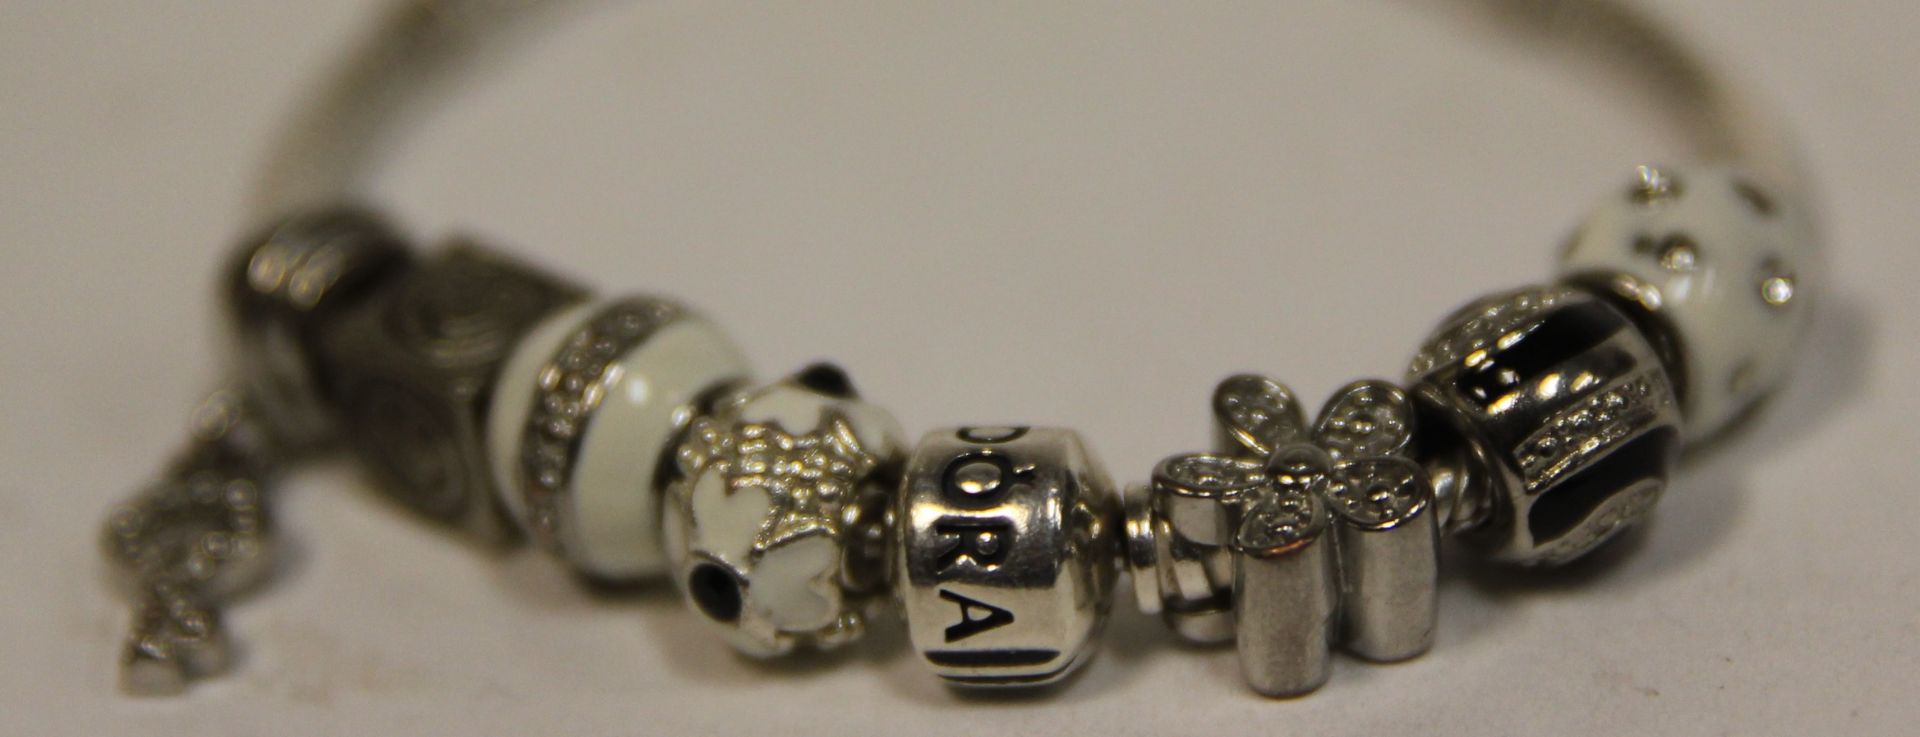 Three Pandora bracelets and seven Pandora charms. - Image 2 of 3